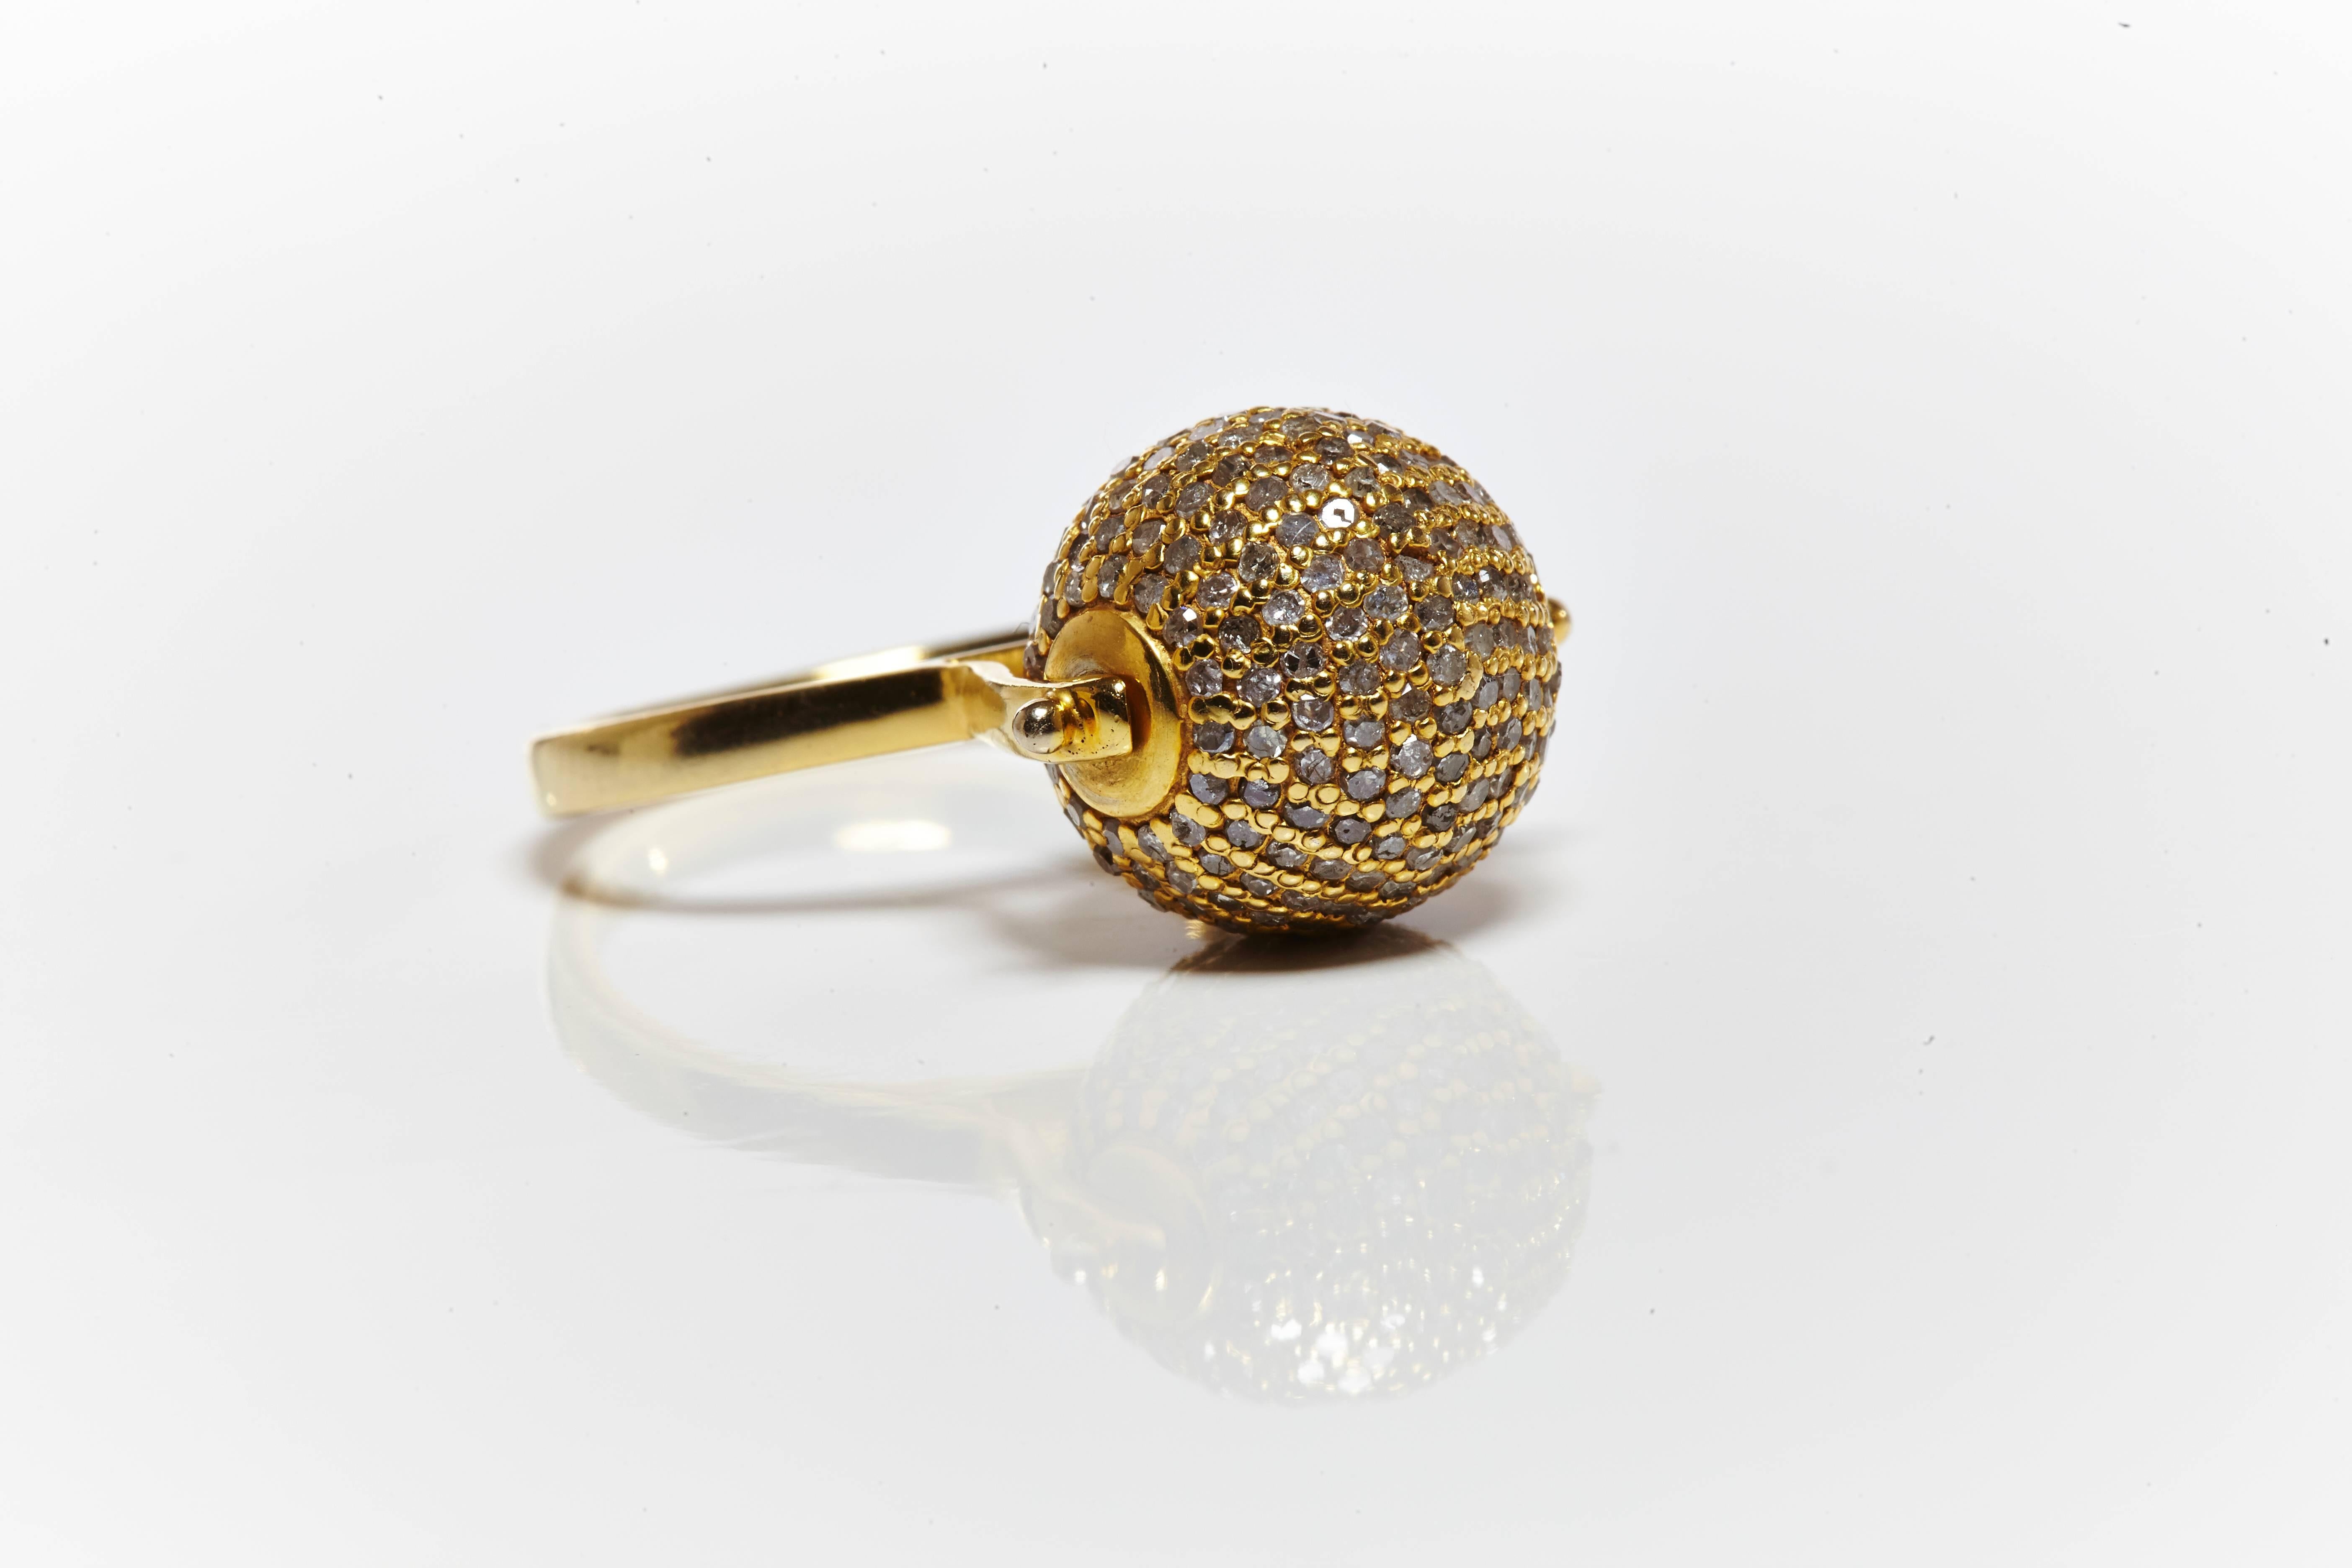 Diamond Disco Ball Ring.
Silver with gold vermeil.
Diamond 2.85 ct.
Handmade in Jaipur, India.